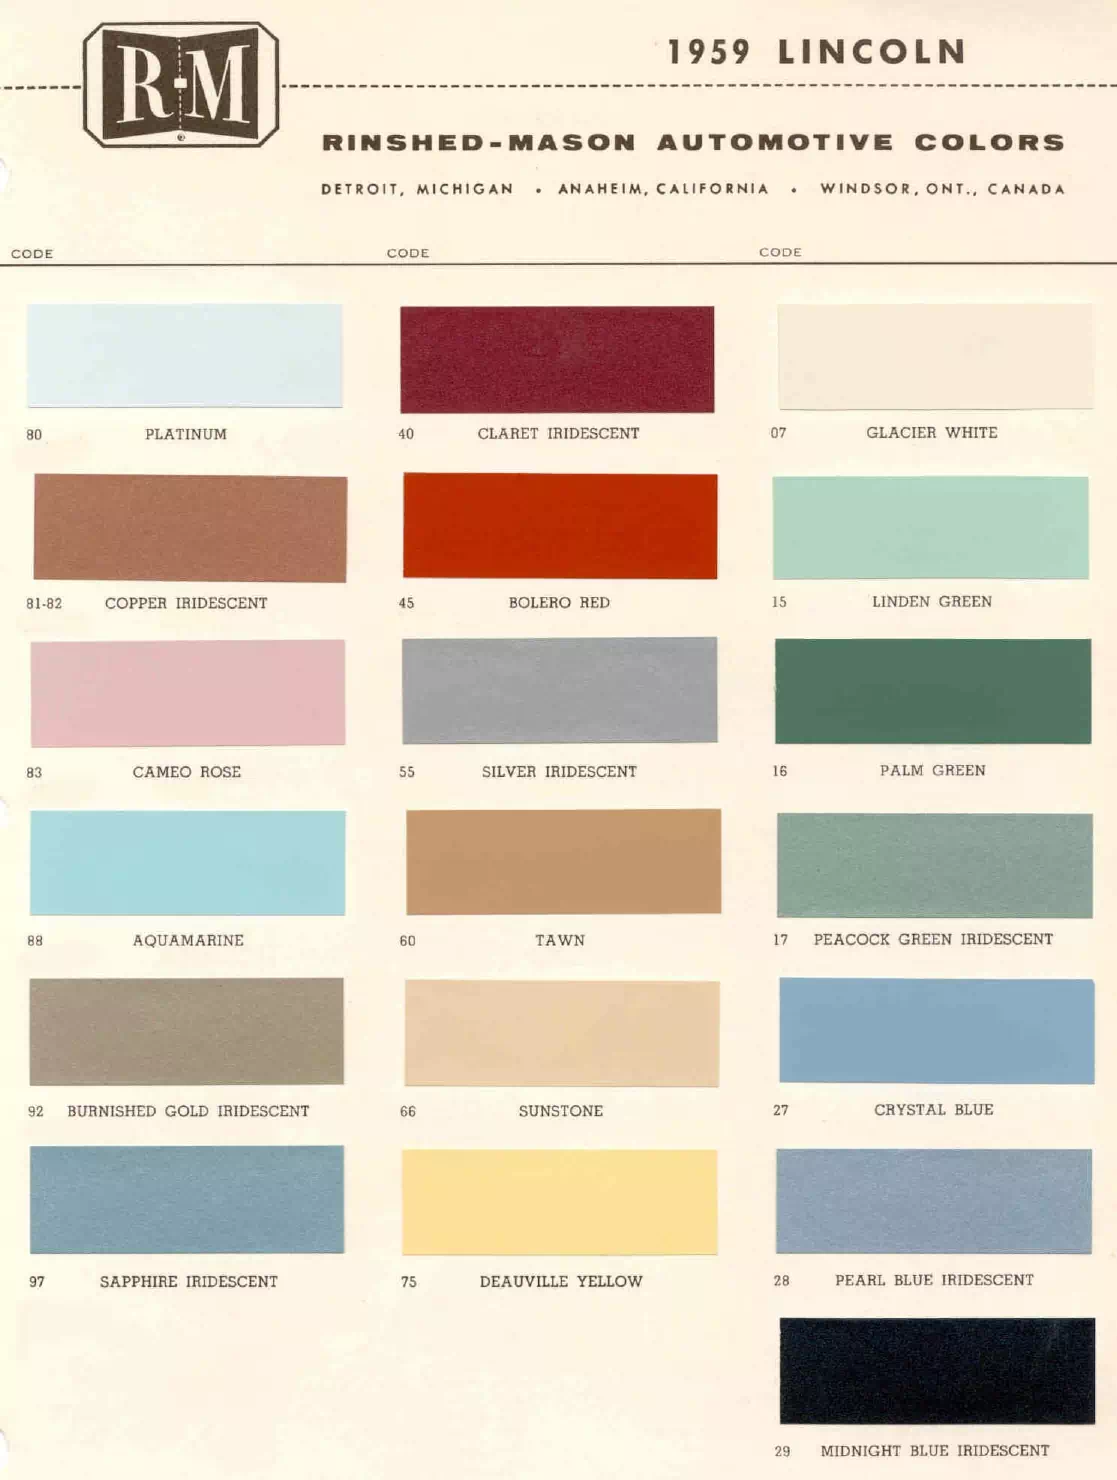 1959 Paint Code Color Book